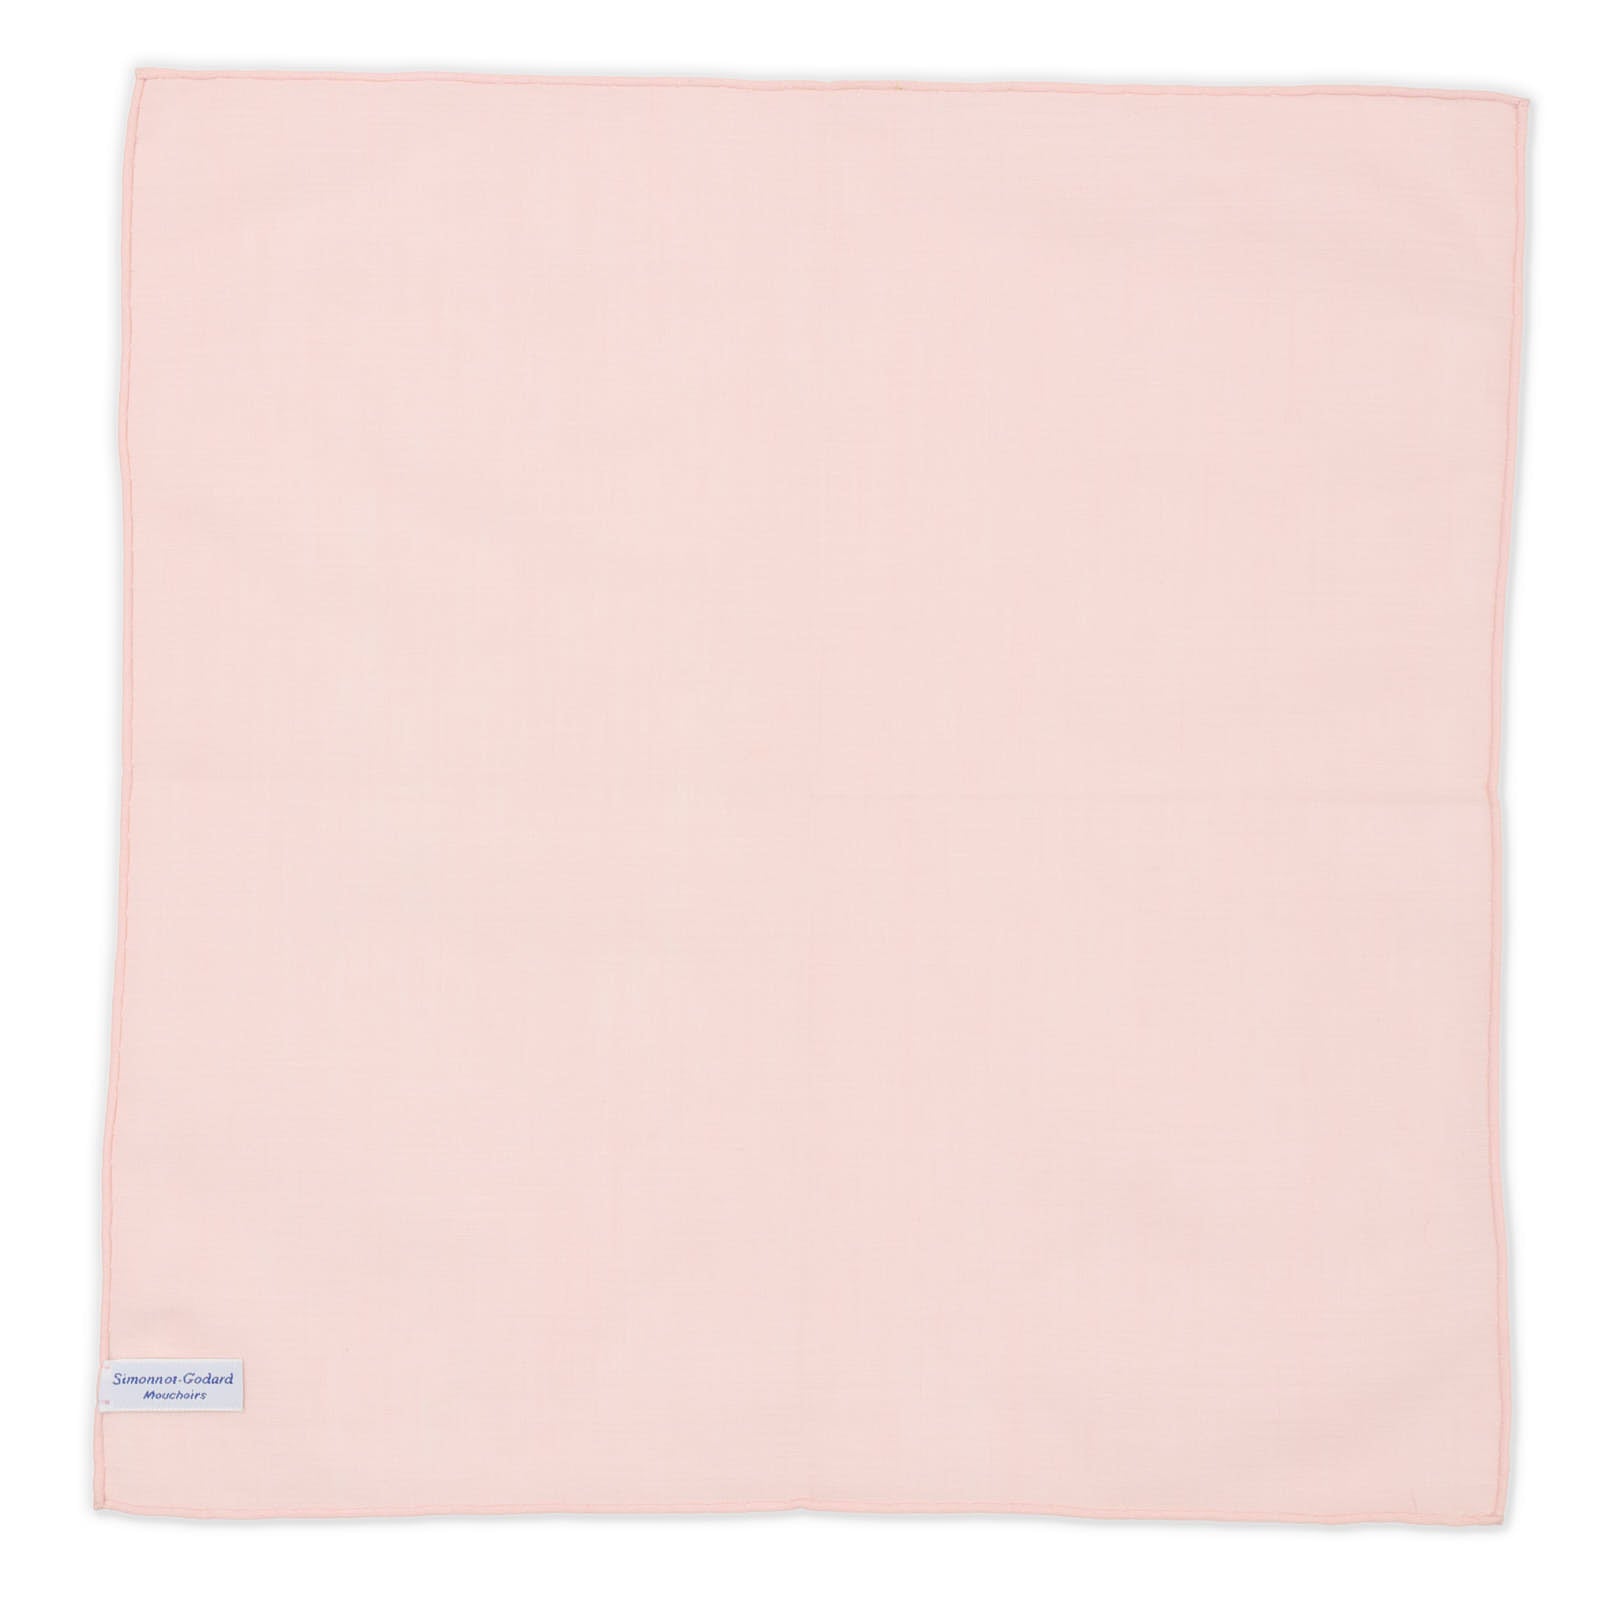 SIMONNOT GODARD Handmade Light Pink Solid Cotton Pocket Square NEW 33cm x 32cm